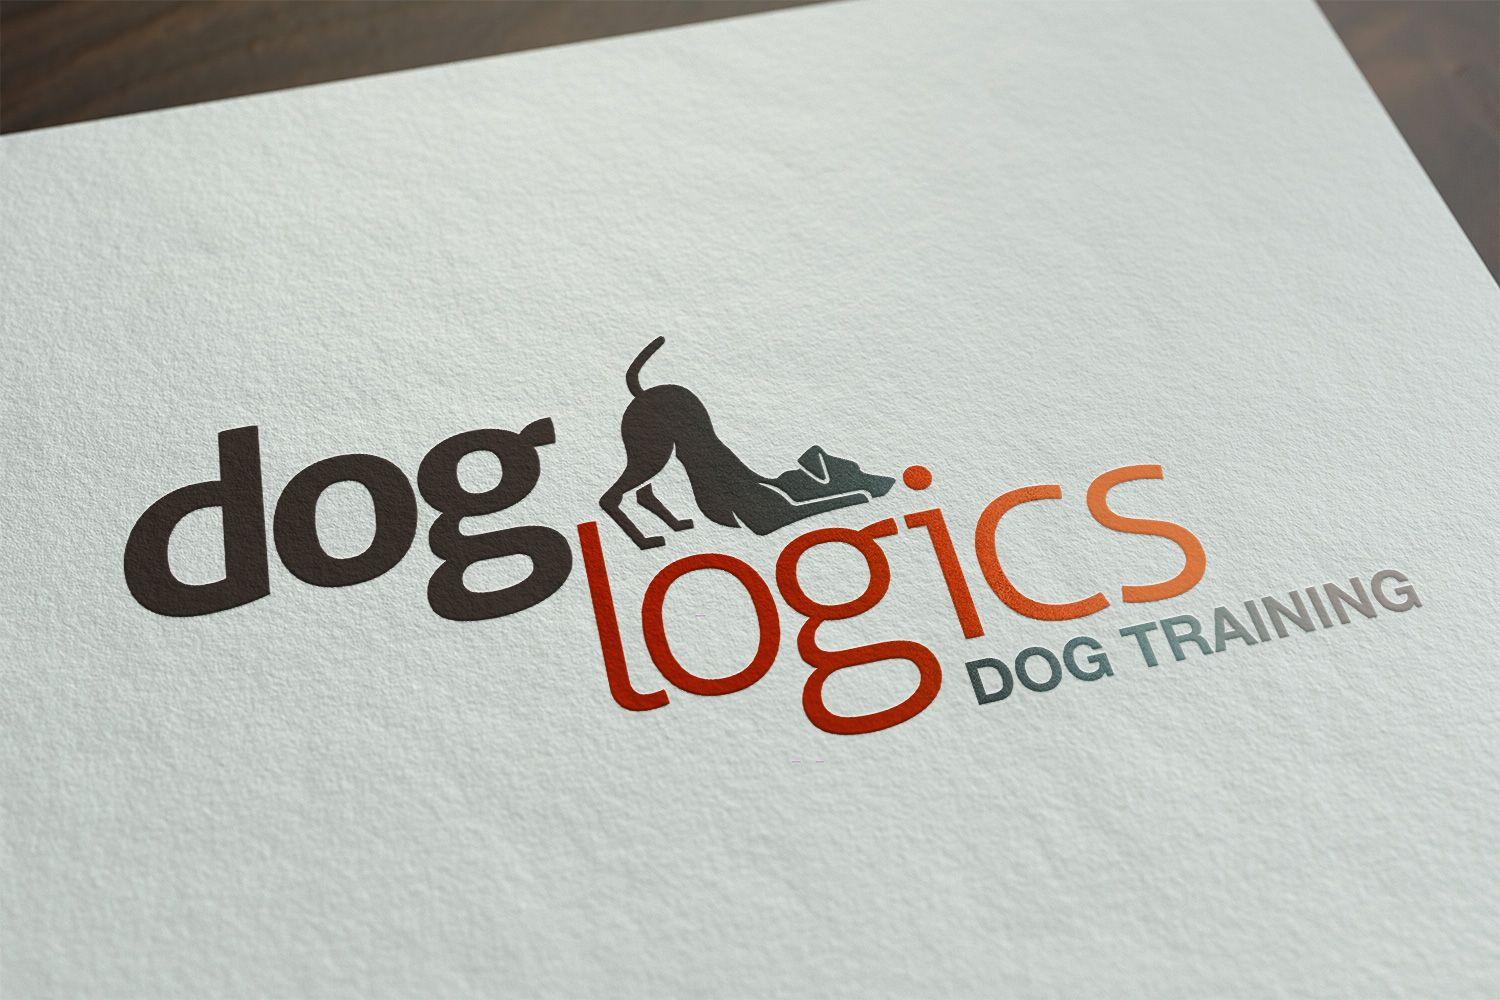 Dog Graphic Logo - Dog Logics - Logo Design - Kore Graphic Design